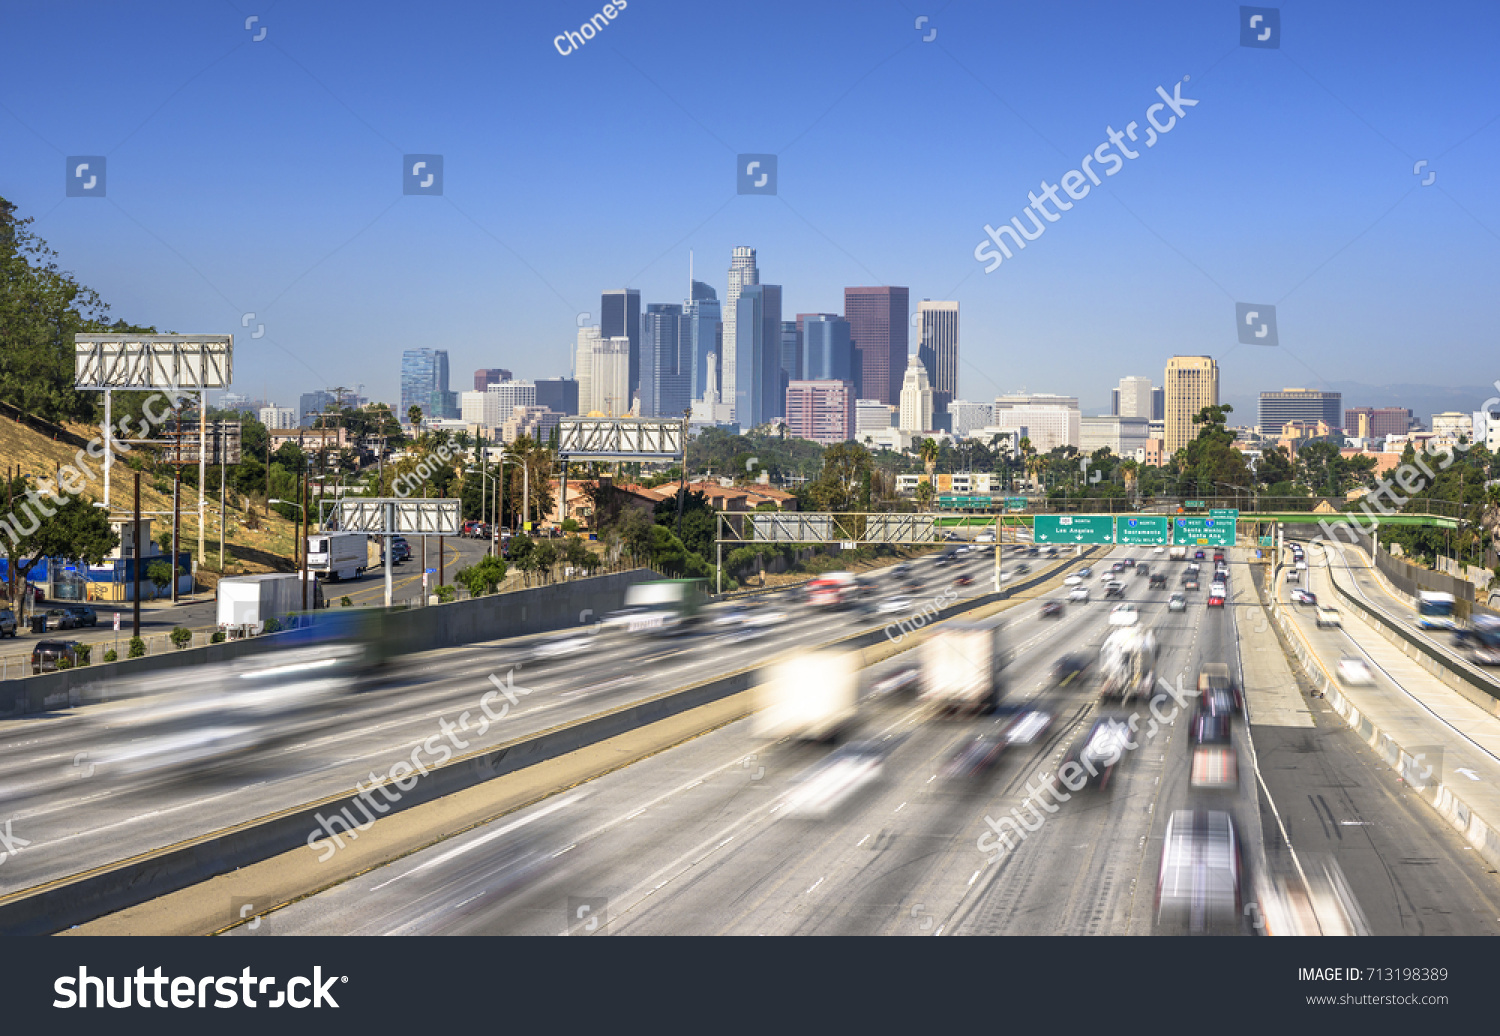 Los Angeles City Freeway Traffic At Sunny Day #713198389